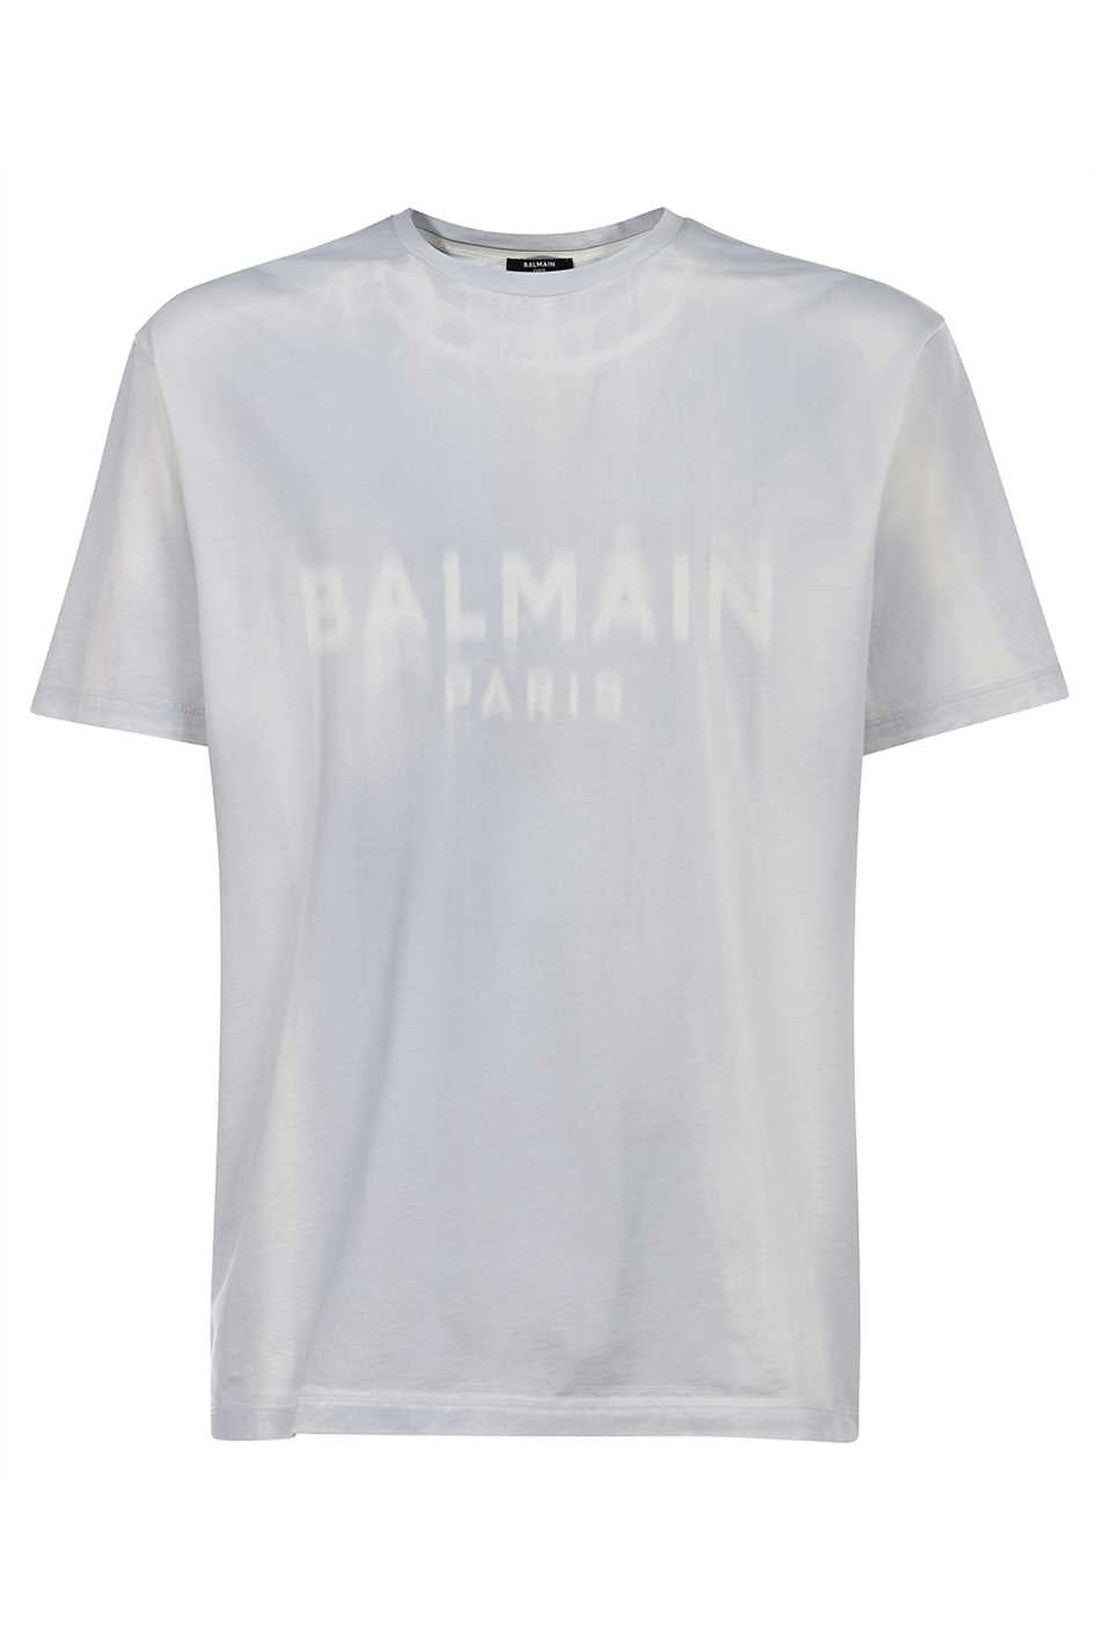 Balmain-OUTLET-SALE-Crew-neck-t-shirt-Shirts-L-ARCHIVE-COLLECTION.jpg